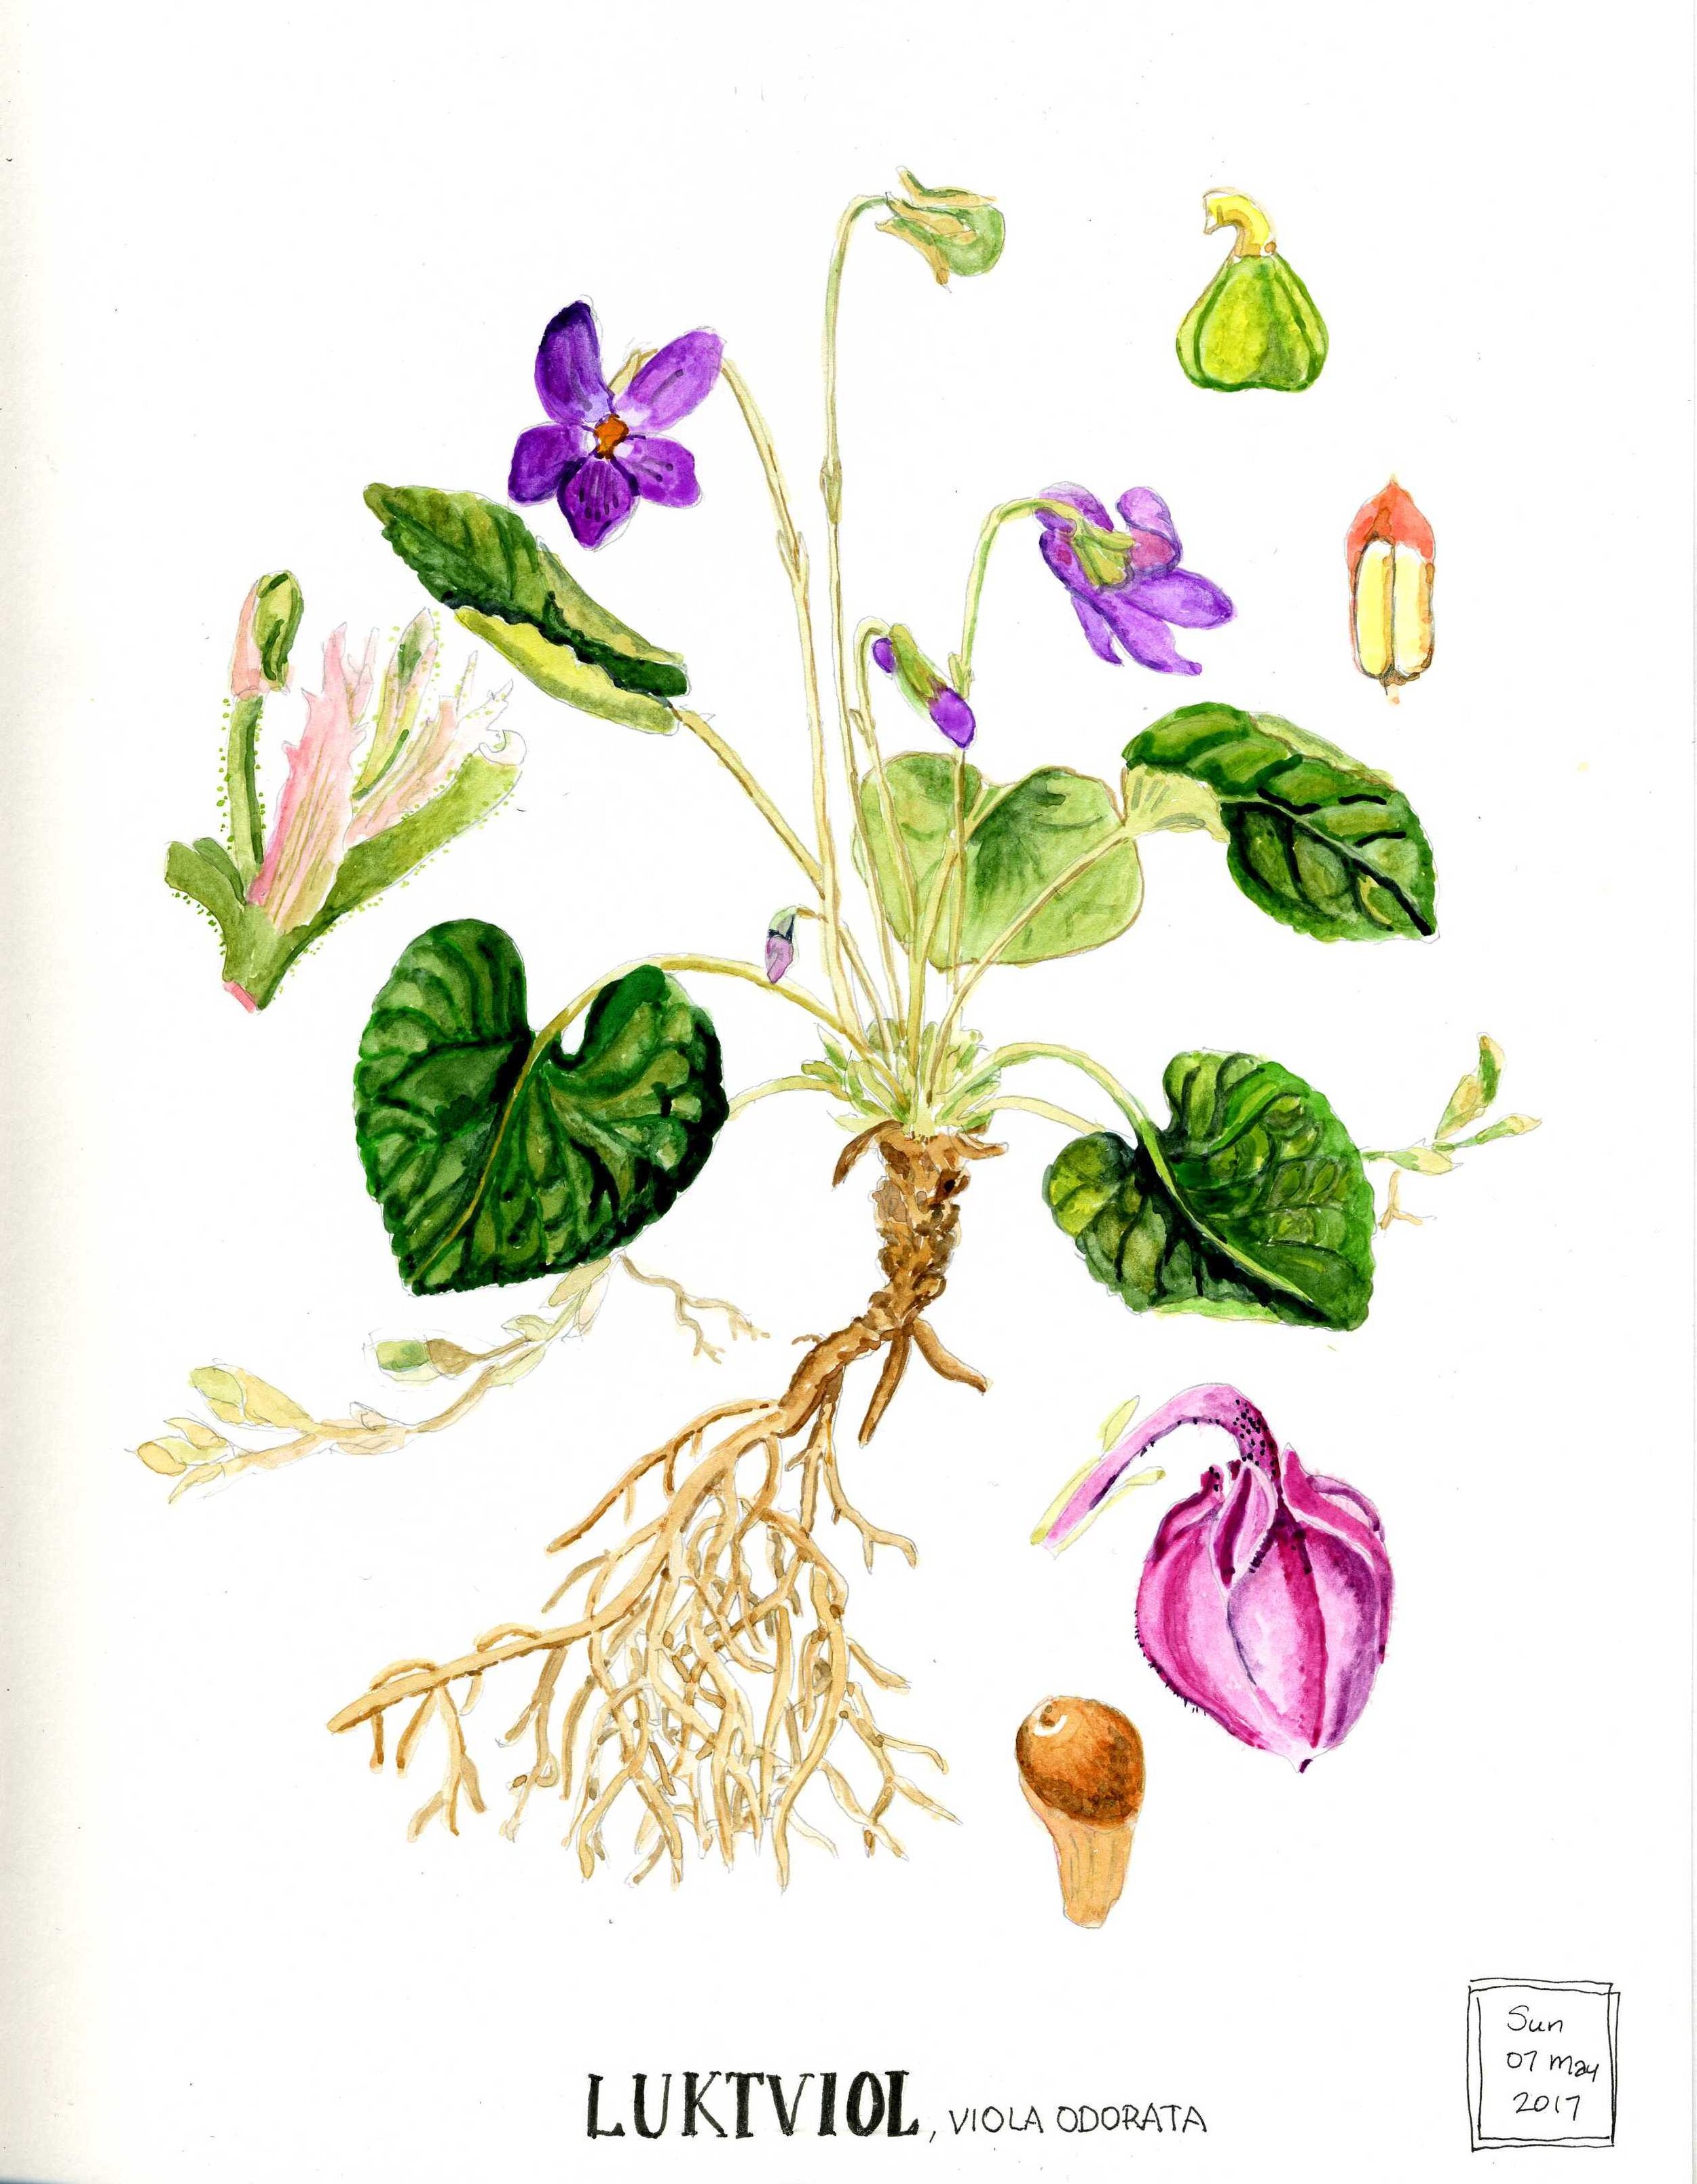 Watercolor version of a viola botanical